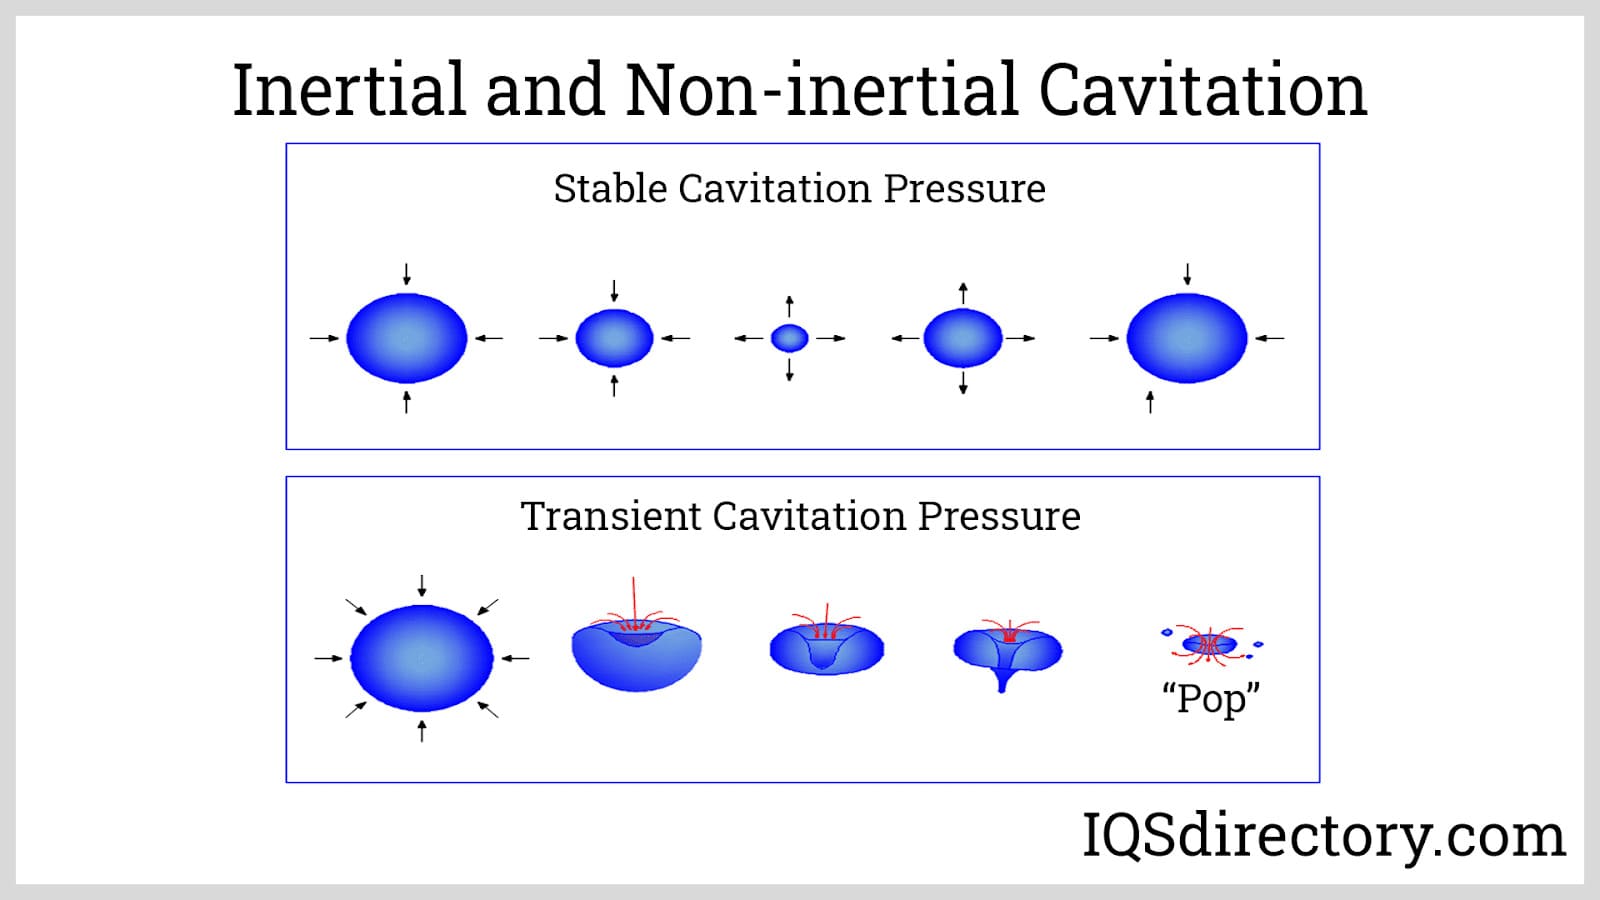 Inertial and Non-inertial Cavitation